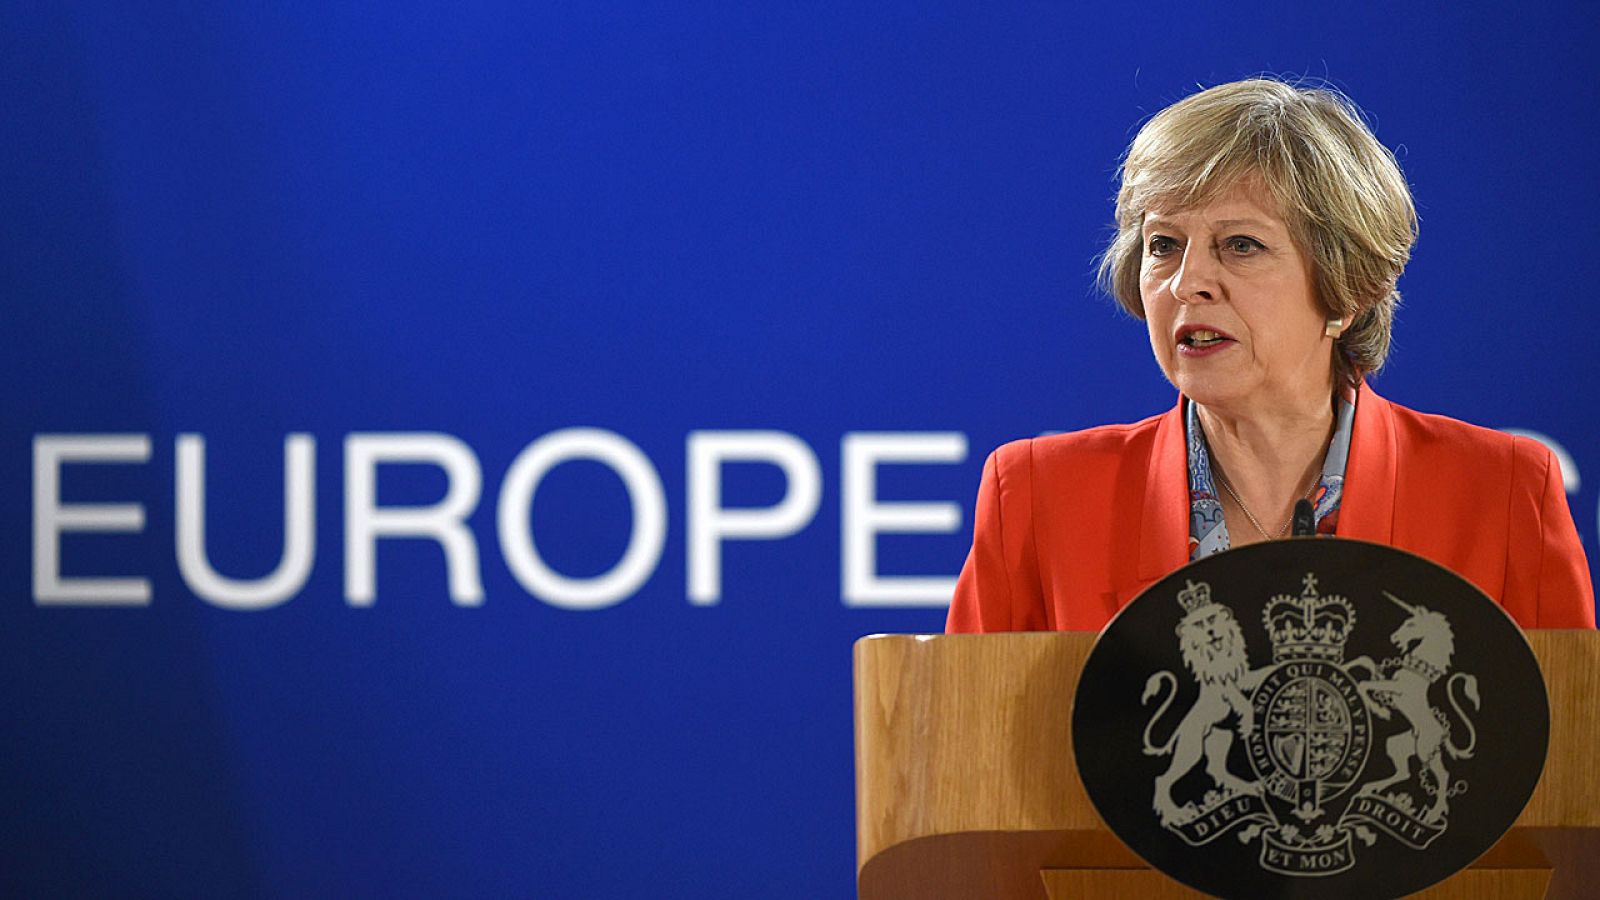 La primera ministra británica, Theresa May, participa en su primera cumbre europea la pasada semana.